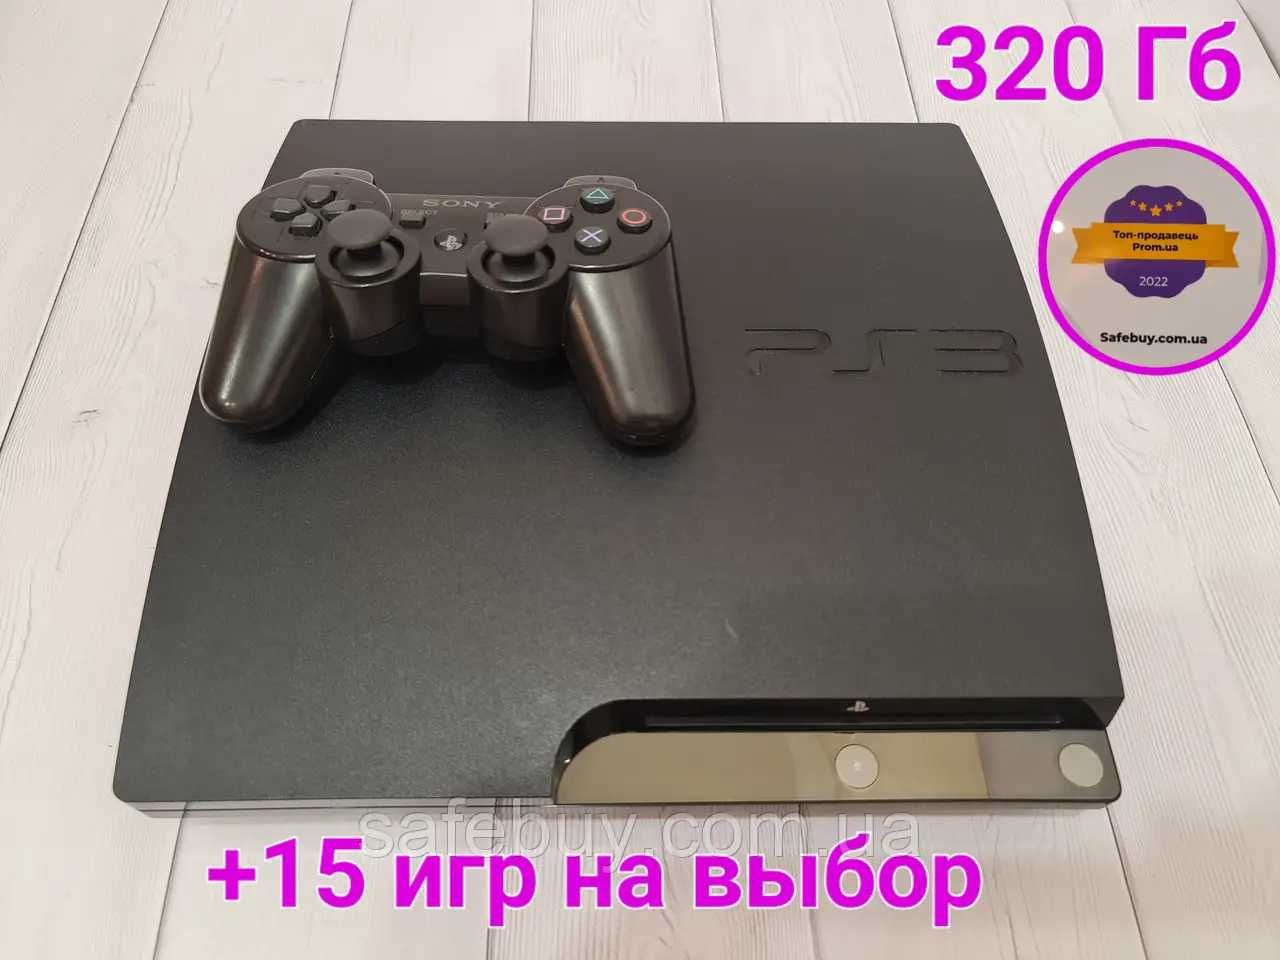 Sony PlayStation 3 Slim 320 Gb PS3 с гарантией и играми